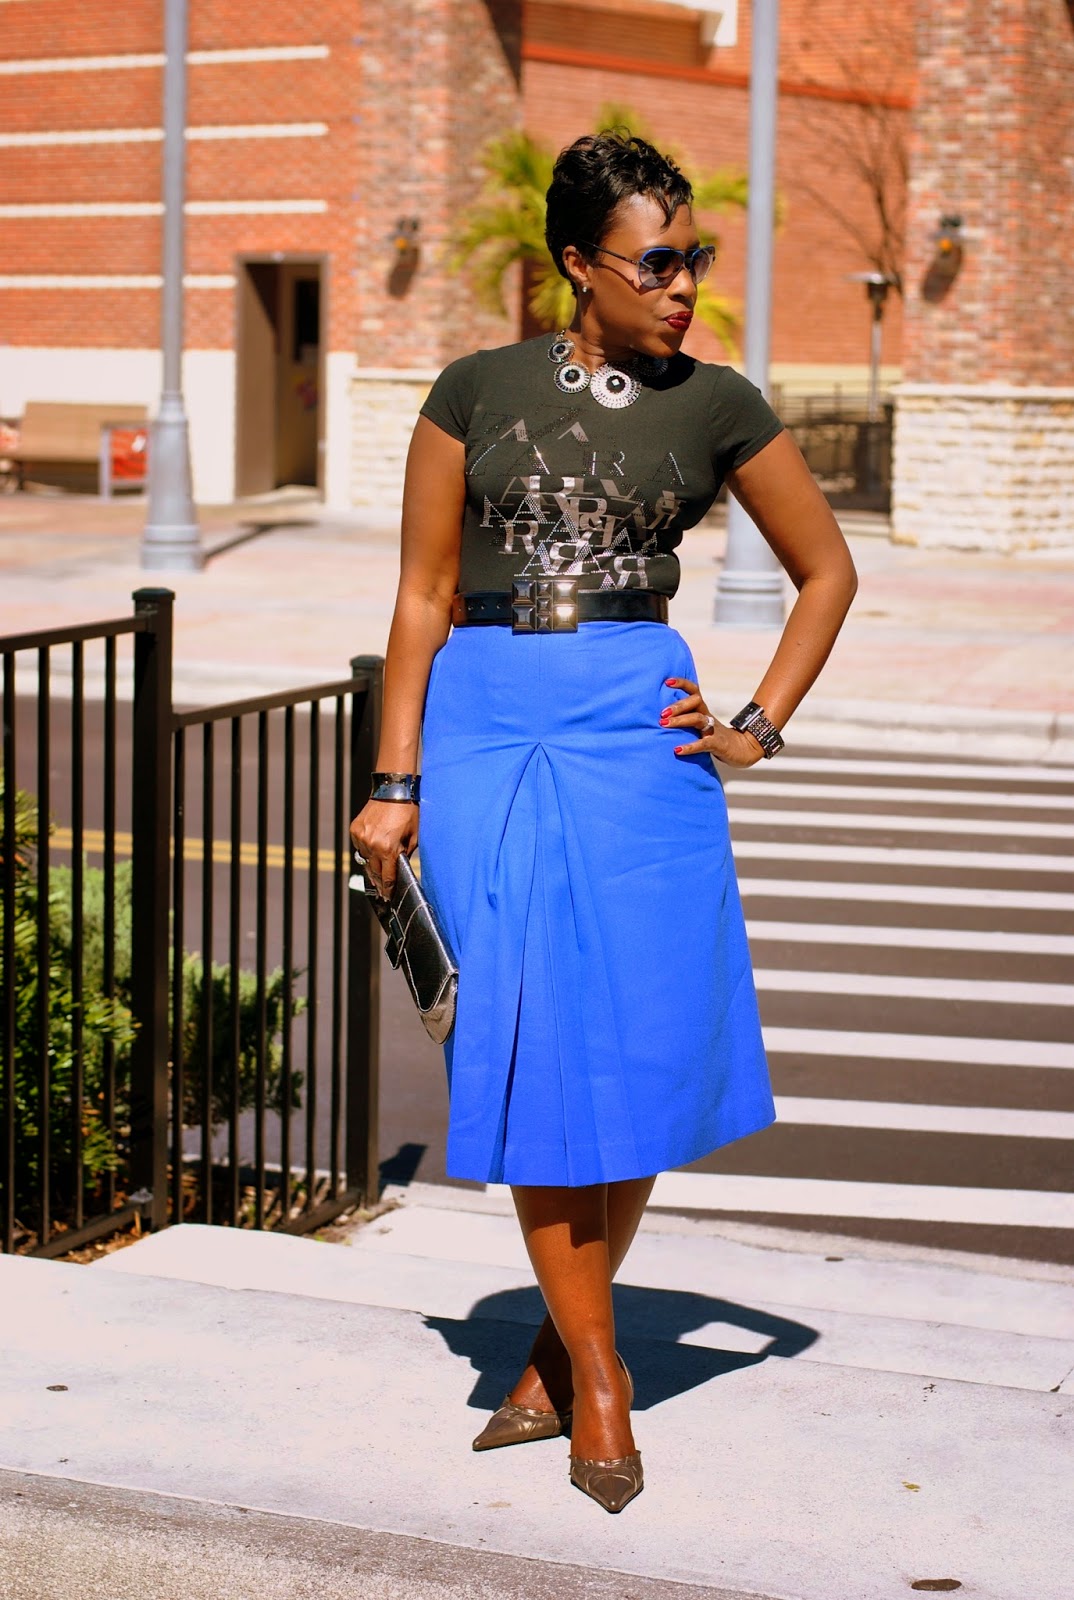 Graphic Tee & Midi Skirt - Fashionably Fab Blog